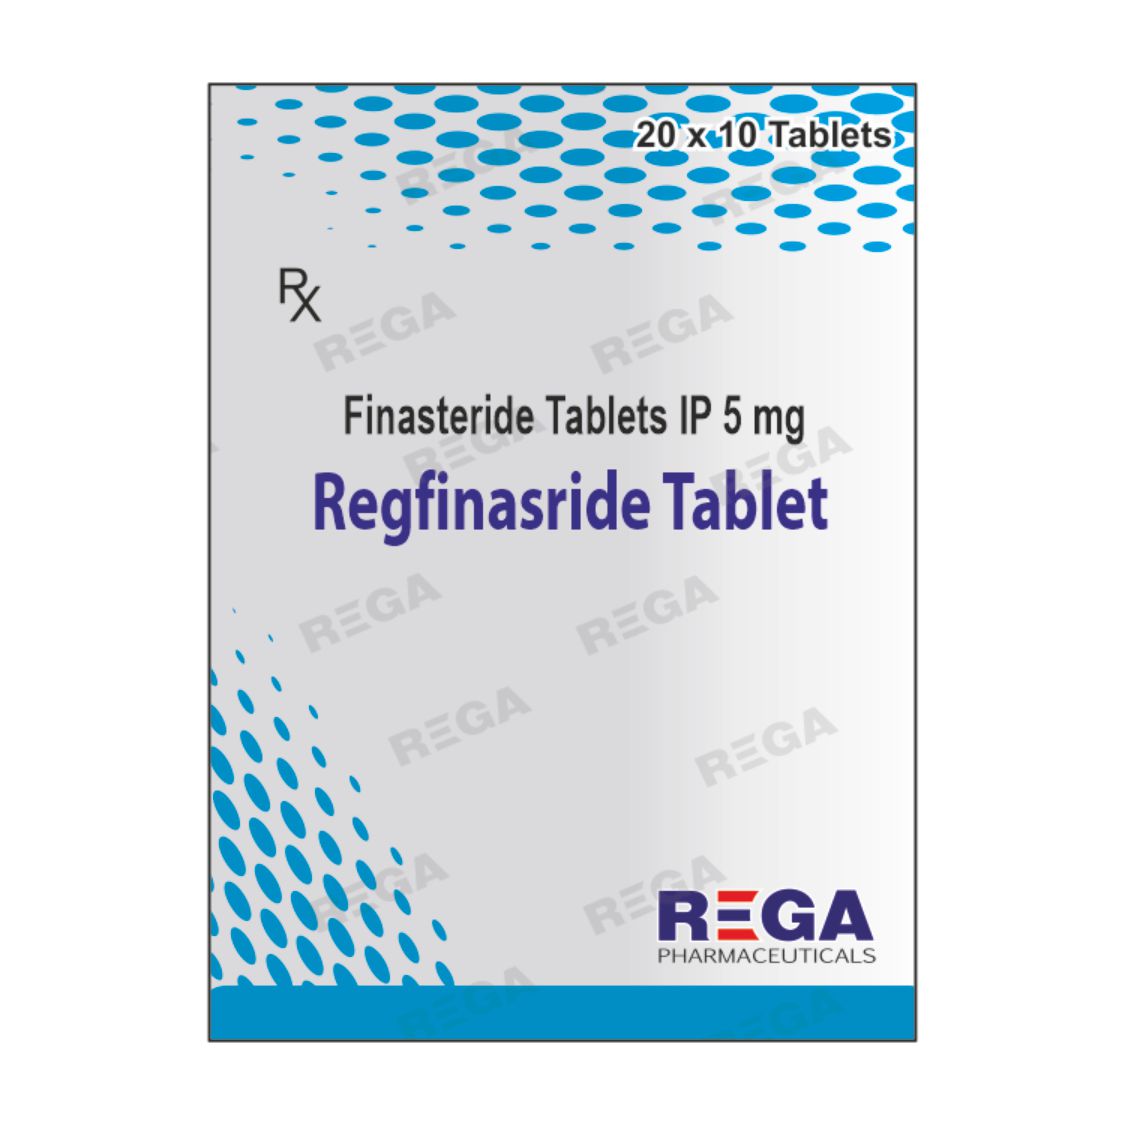 Finasteride Tablets 5 mg